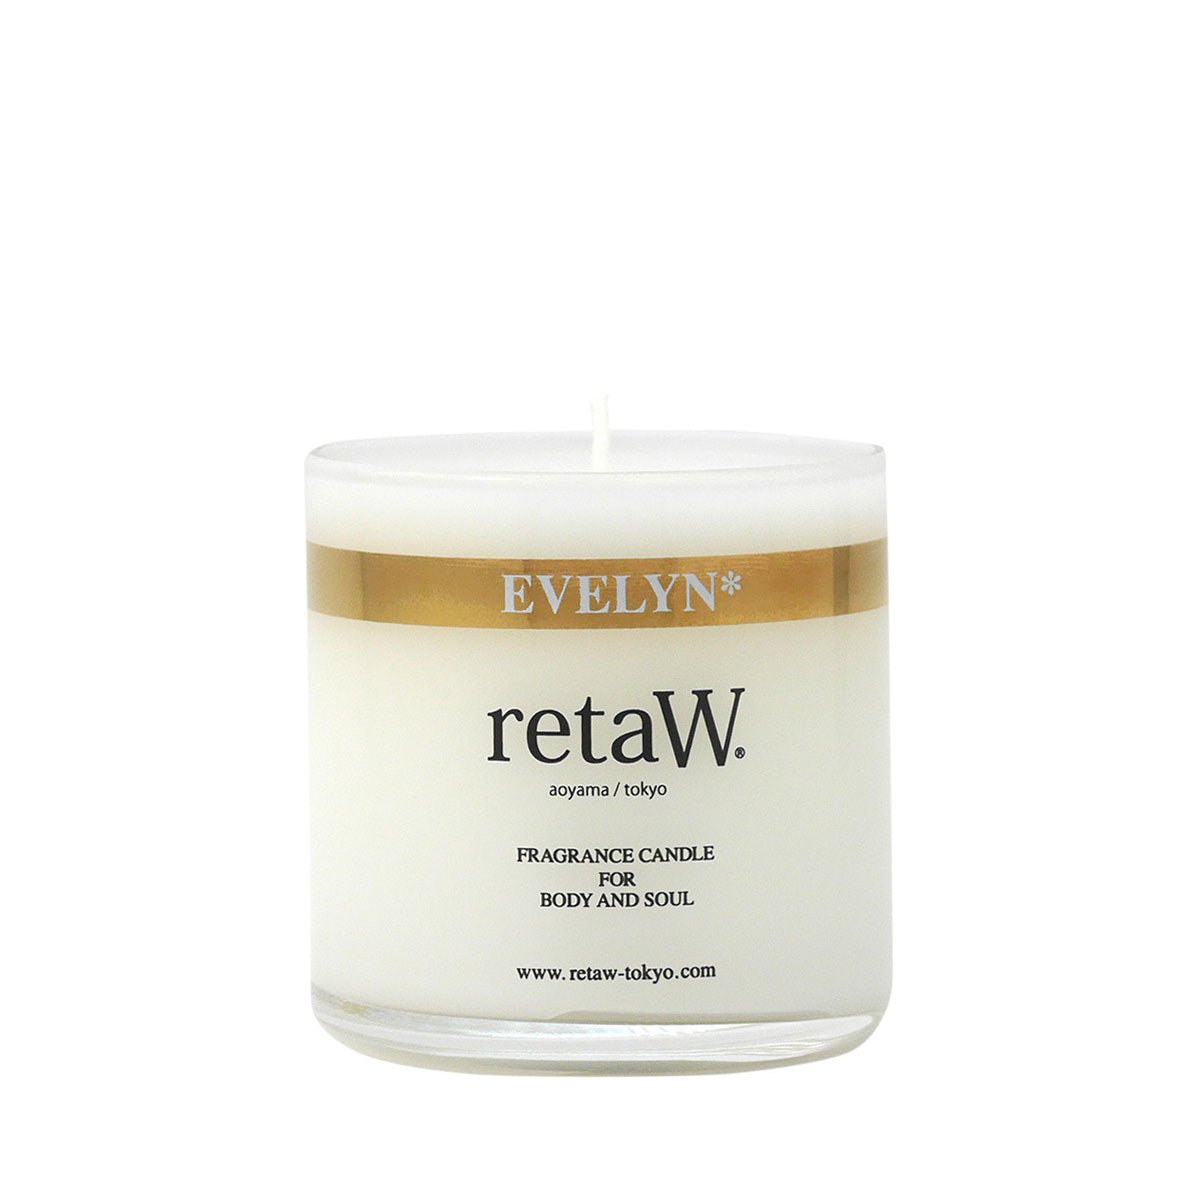 retaW Fragrance Candle 'Evelyn'  - Allike Store